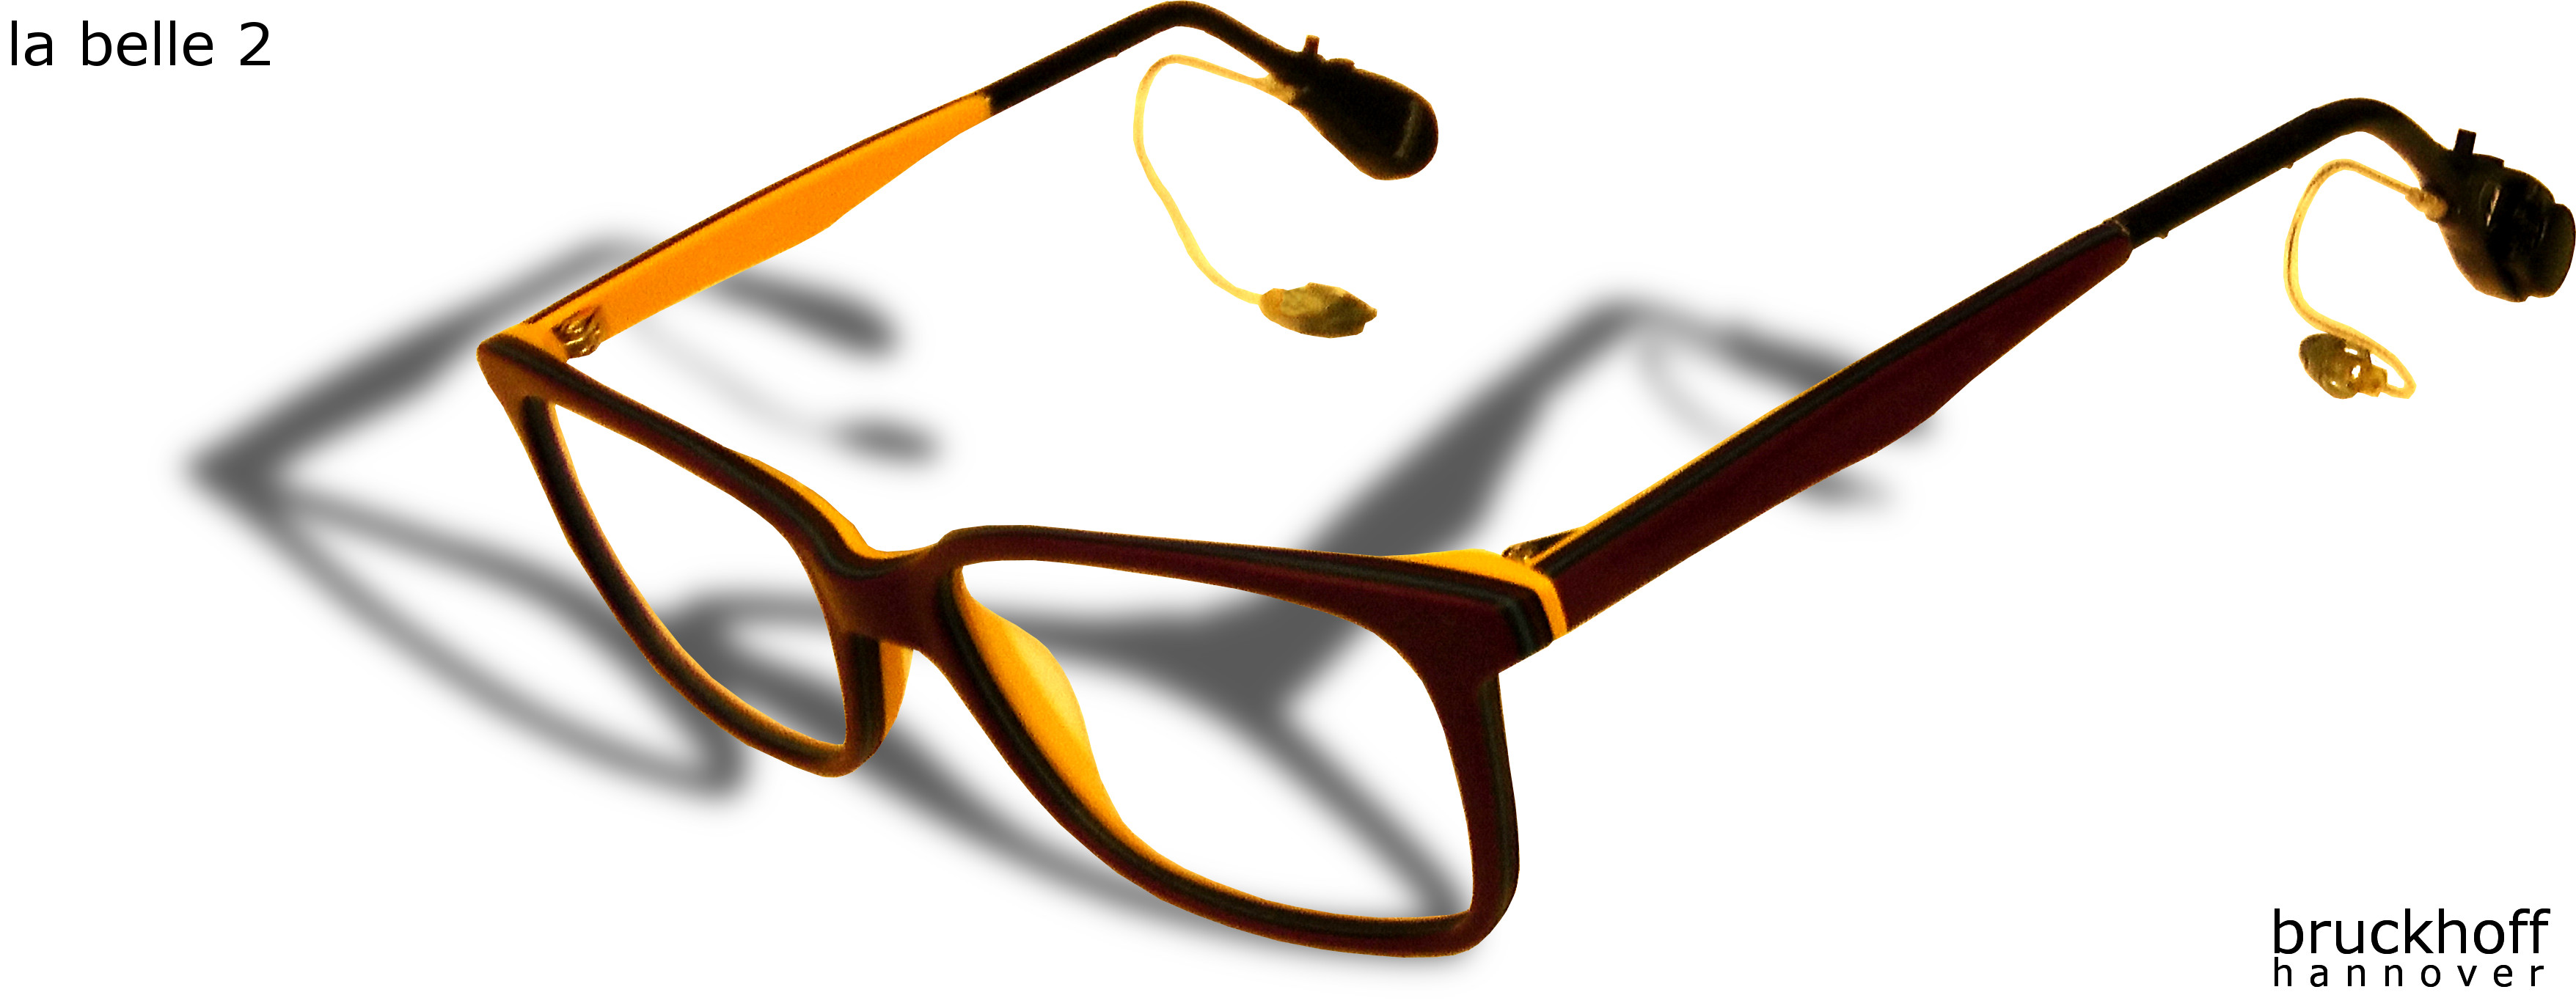 la belle 2 - Hörbrille mit perfektem Design und RIC-System